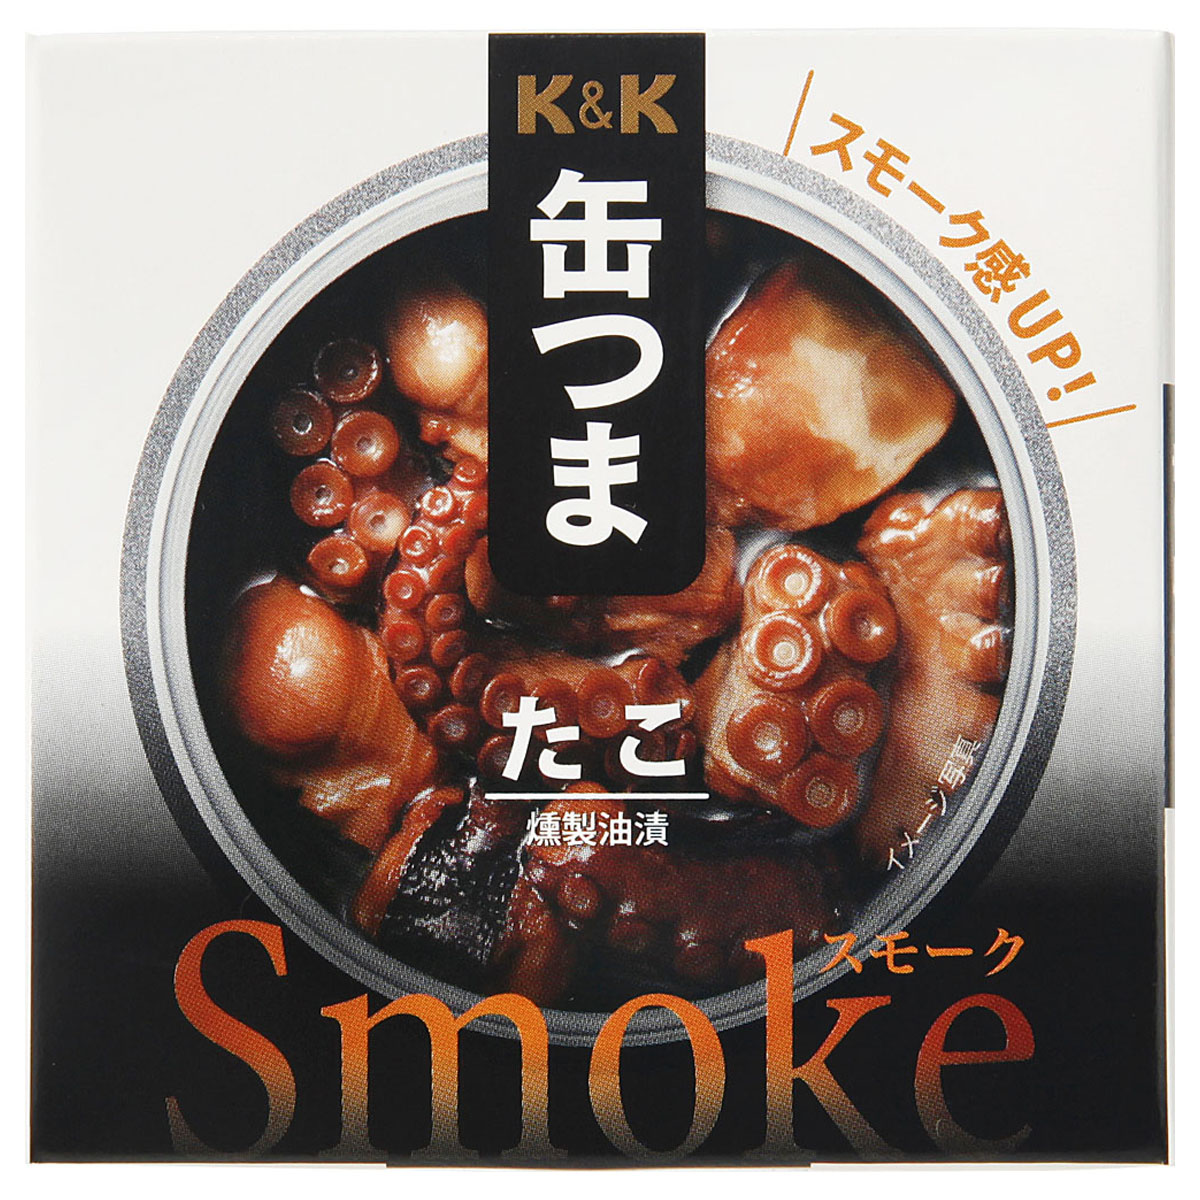 K&K 缶つまSmoke たこ 50g x6